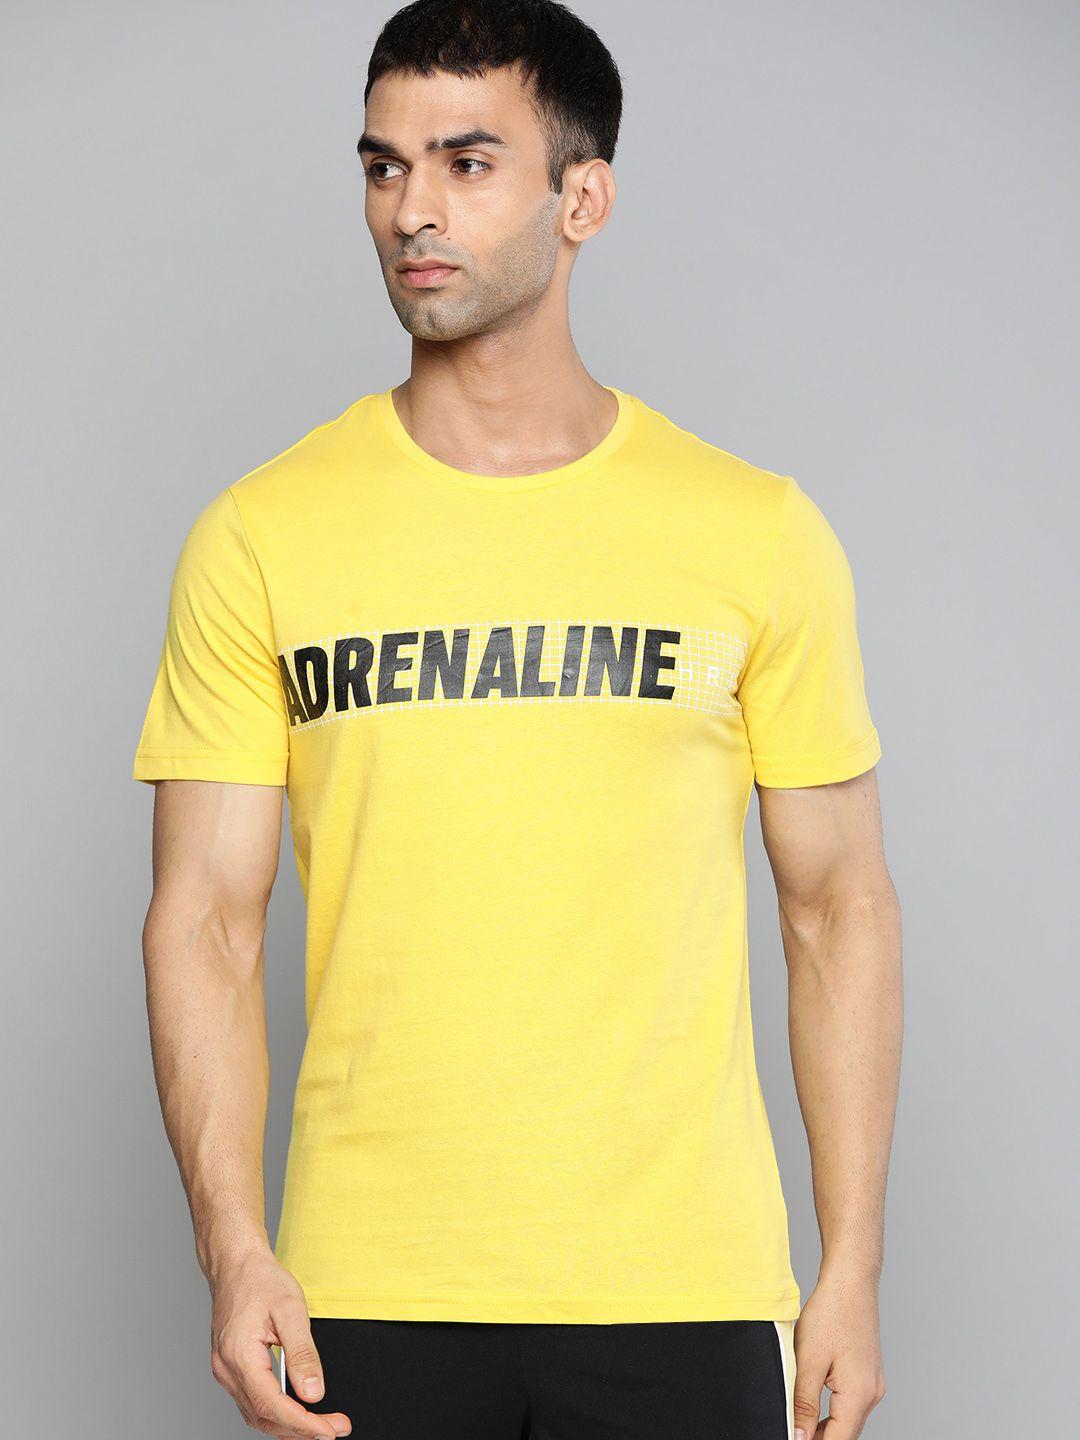 hrx by hrithik roshan lifestyle men mustard yellow bio-wash typography pure cotton tshirt